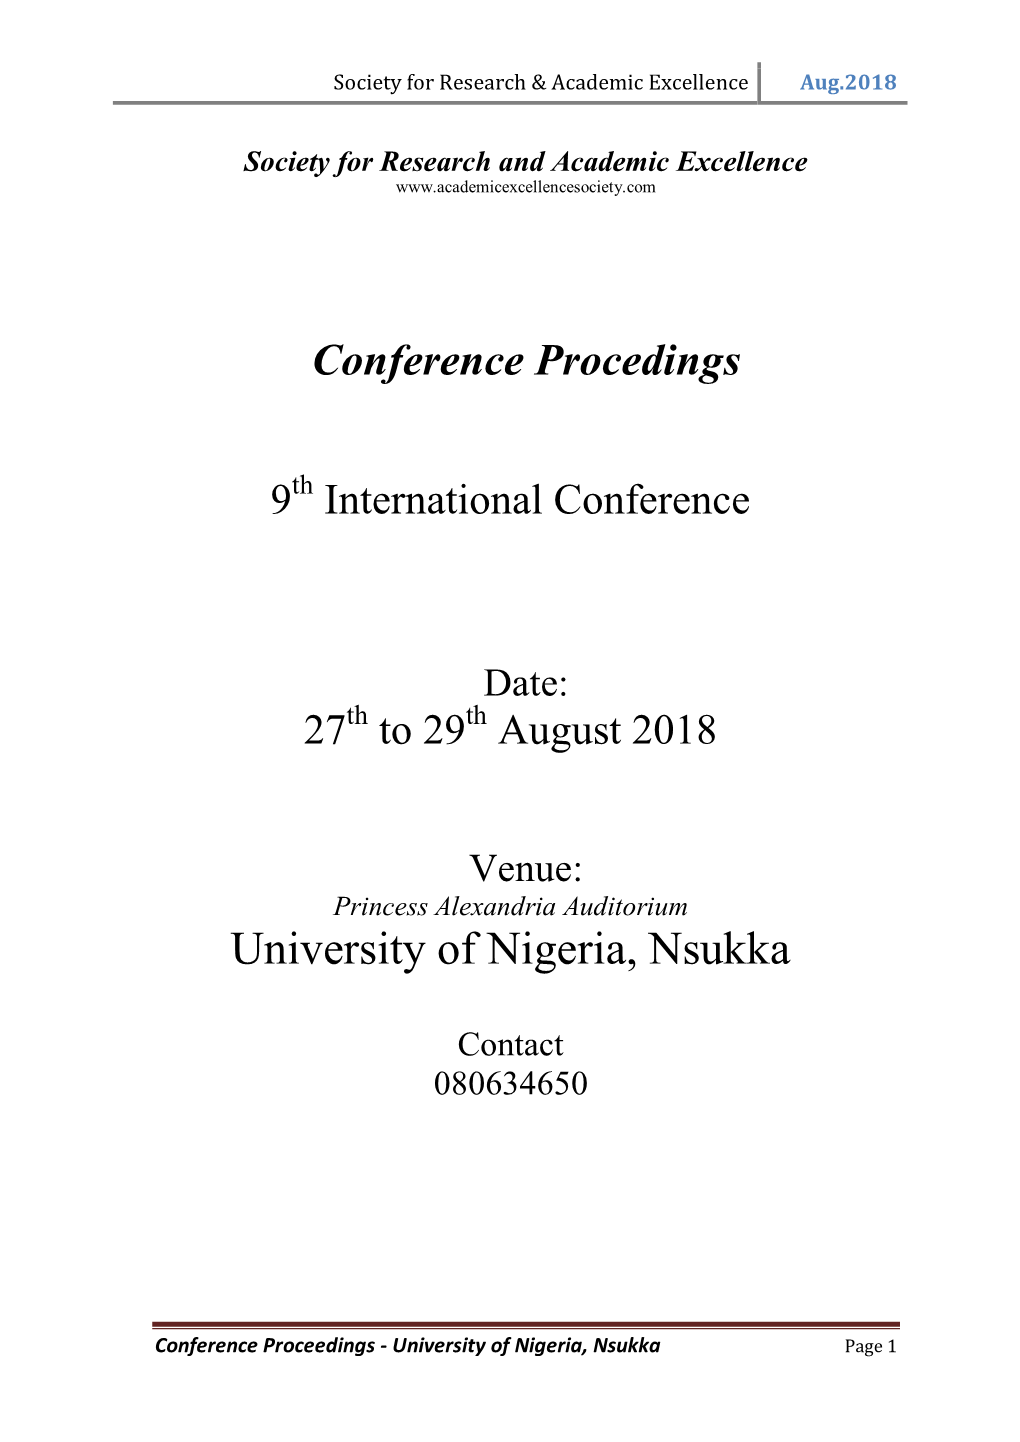 Conference Proceedings - University of Nigeria, Nsukka Page 1